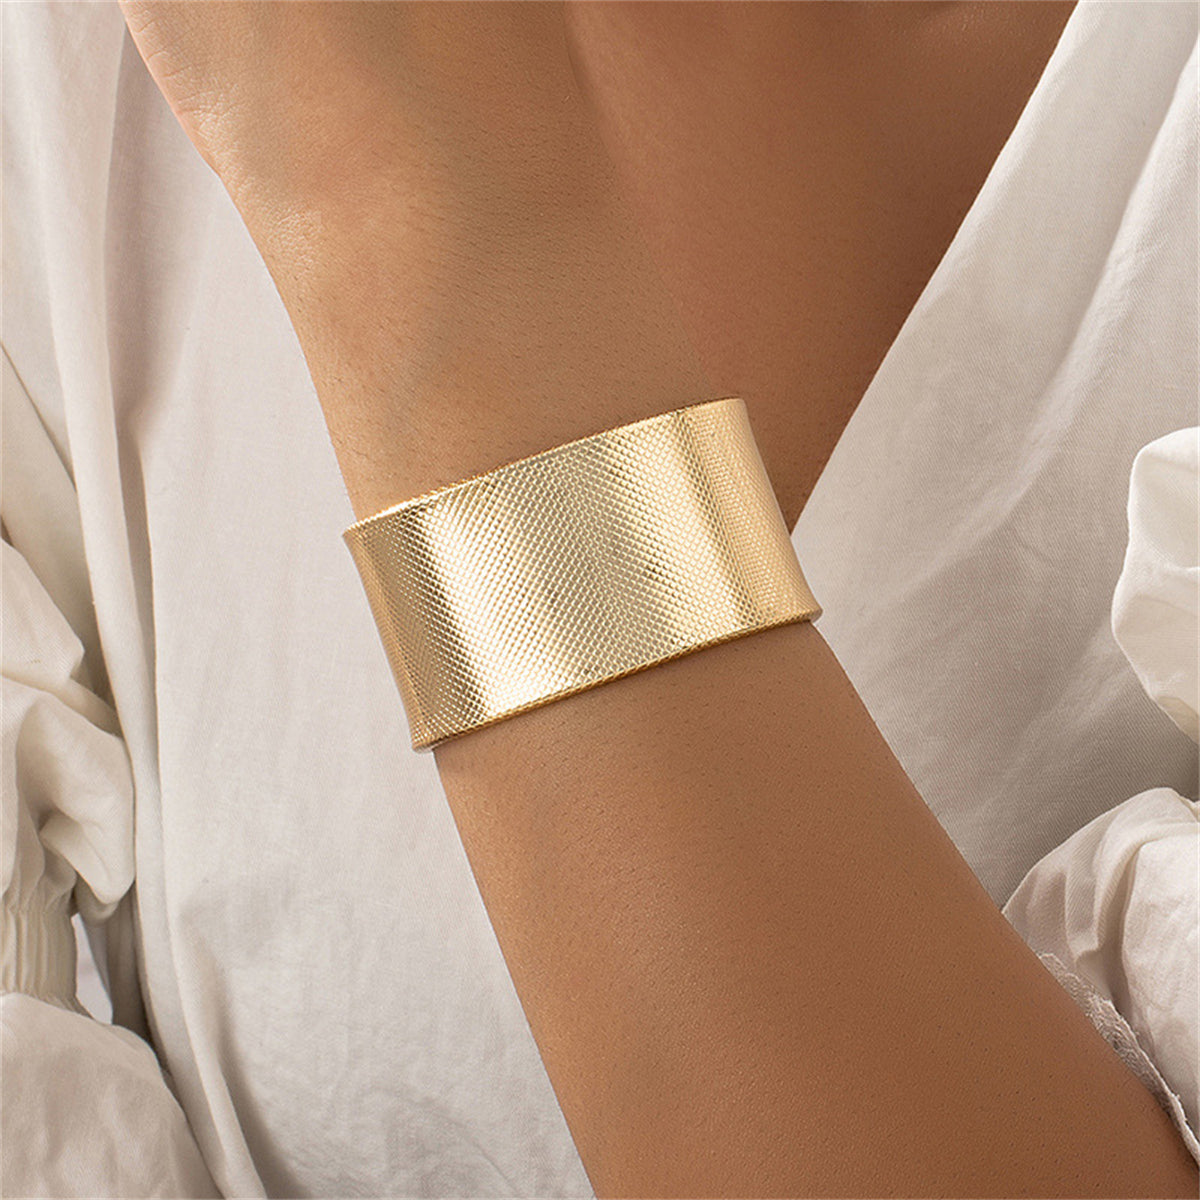 18K Gold-Plated Textured Cuff Bracelet